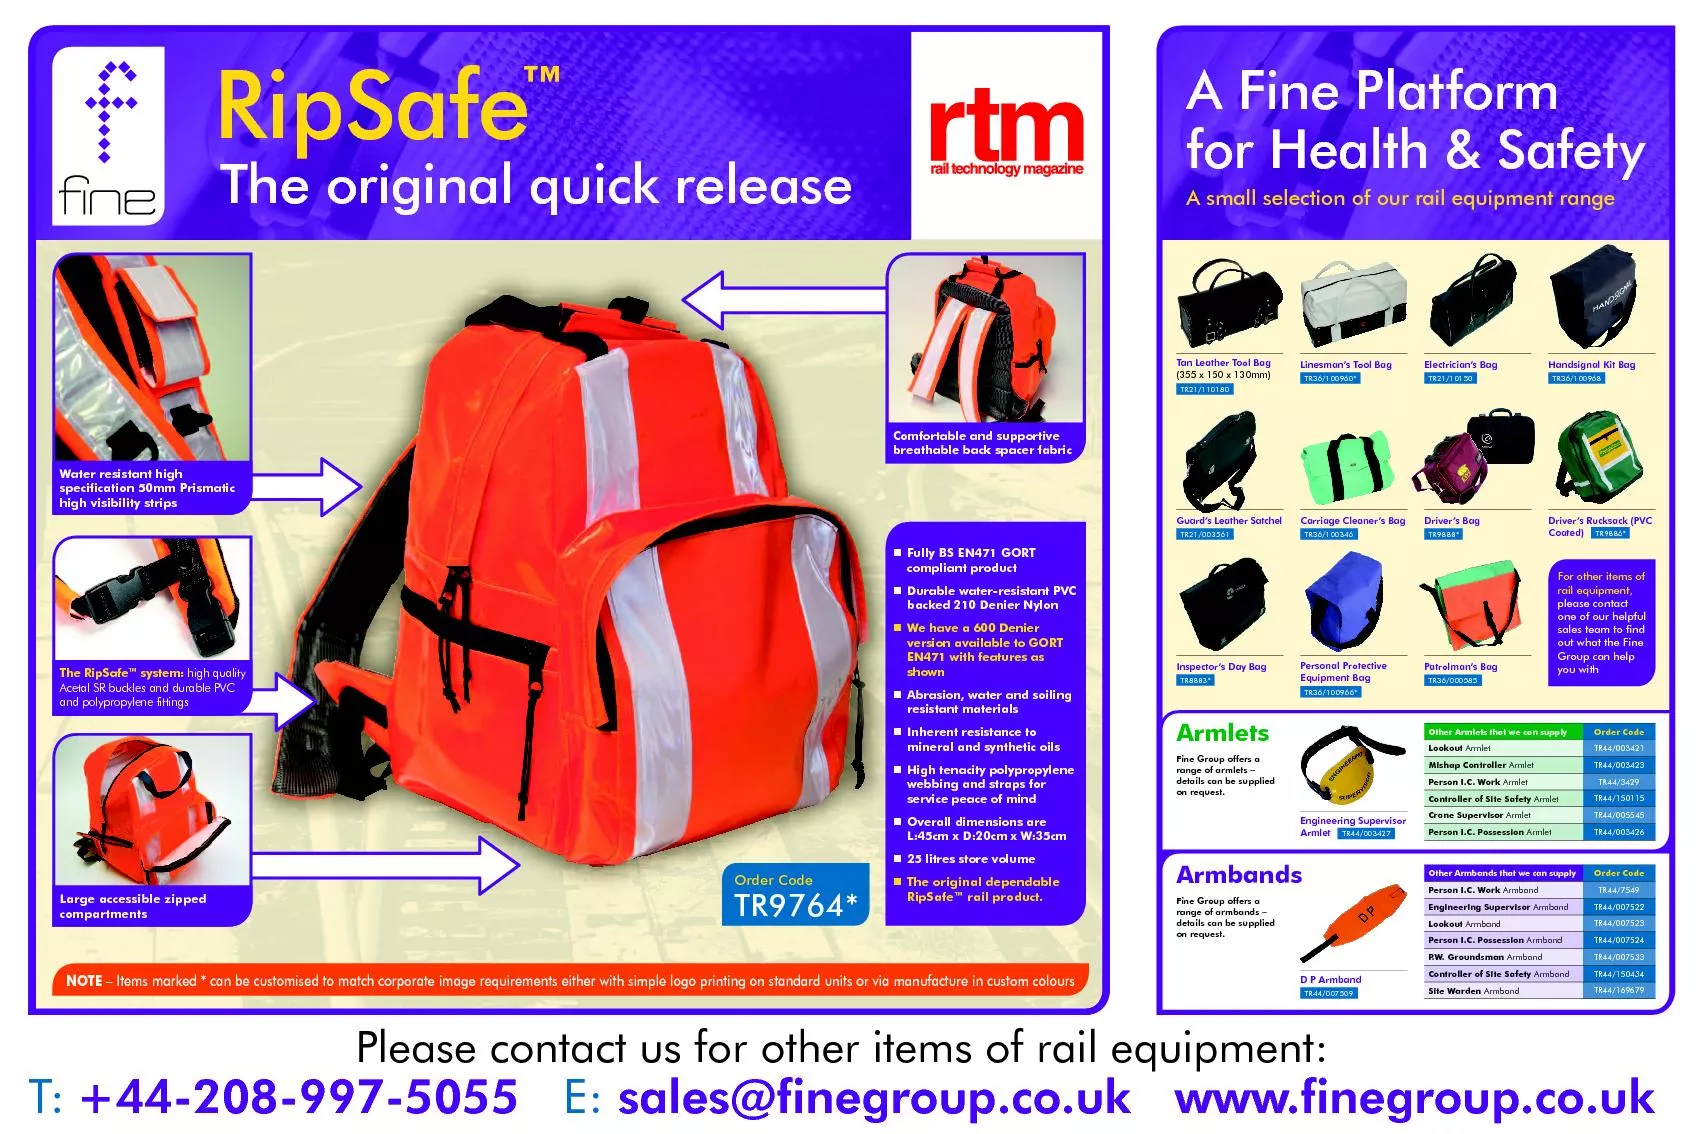 TR44/003427A Fine Platform for Health & Safety